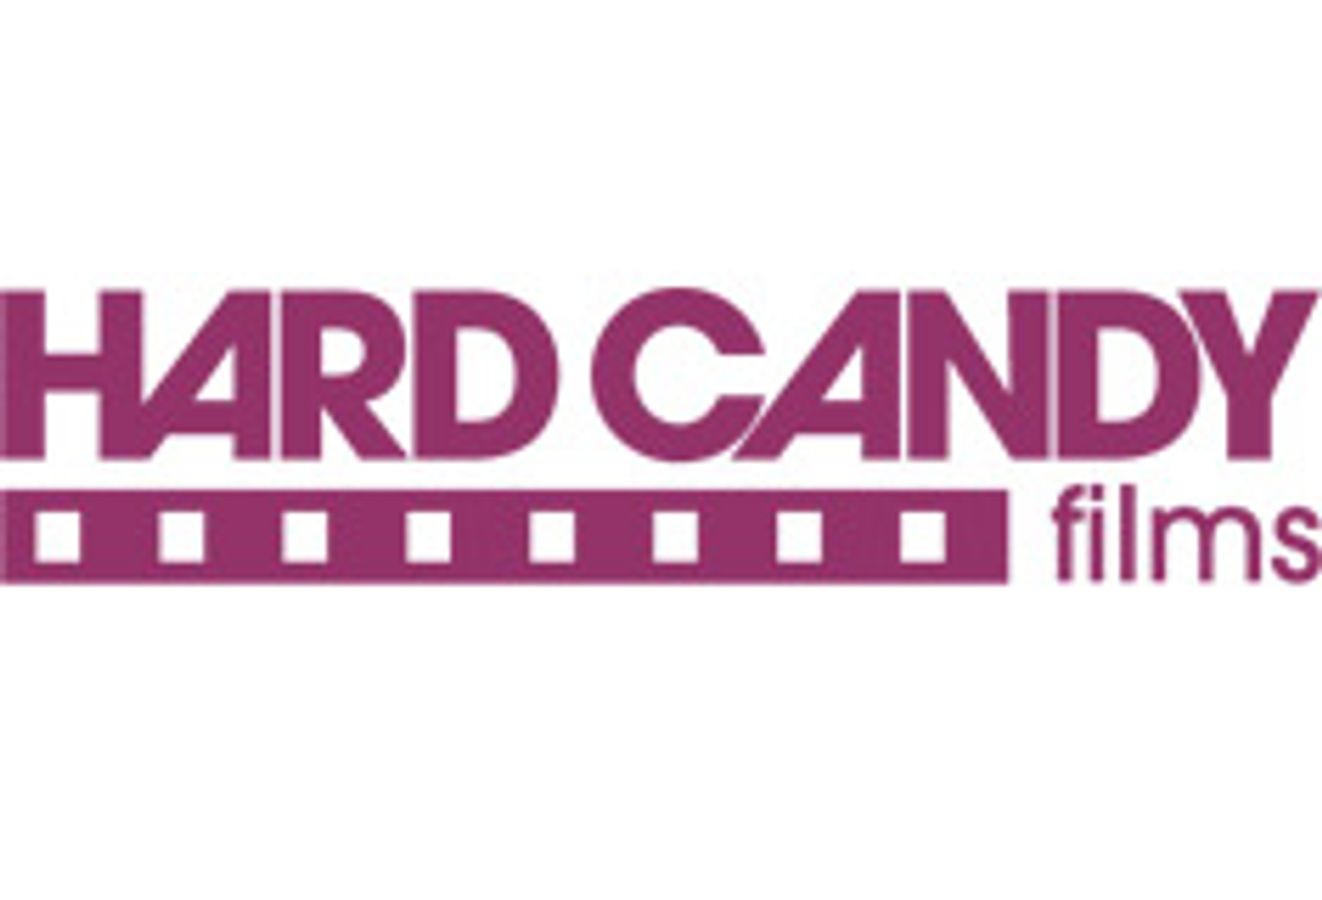 Hard Candy Films